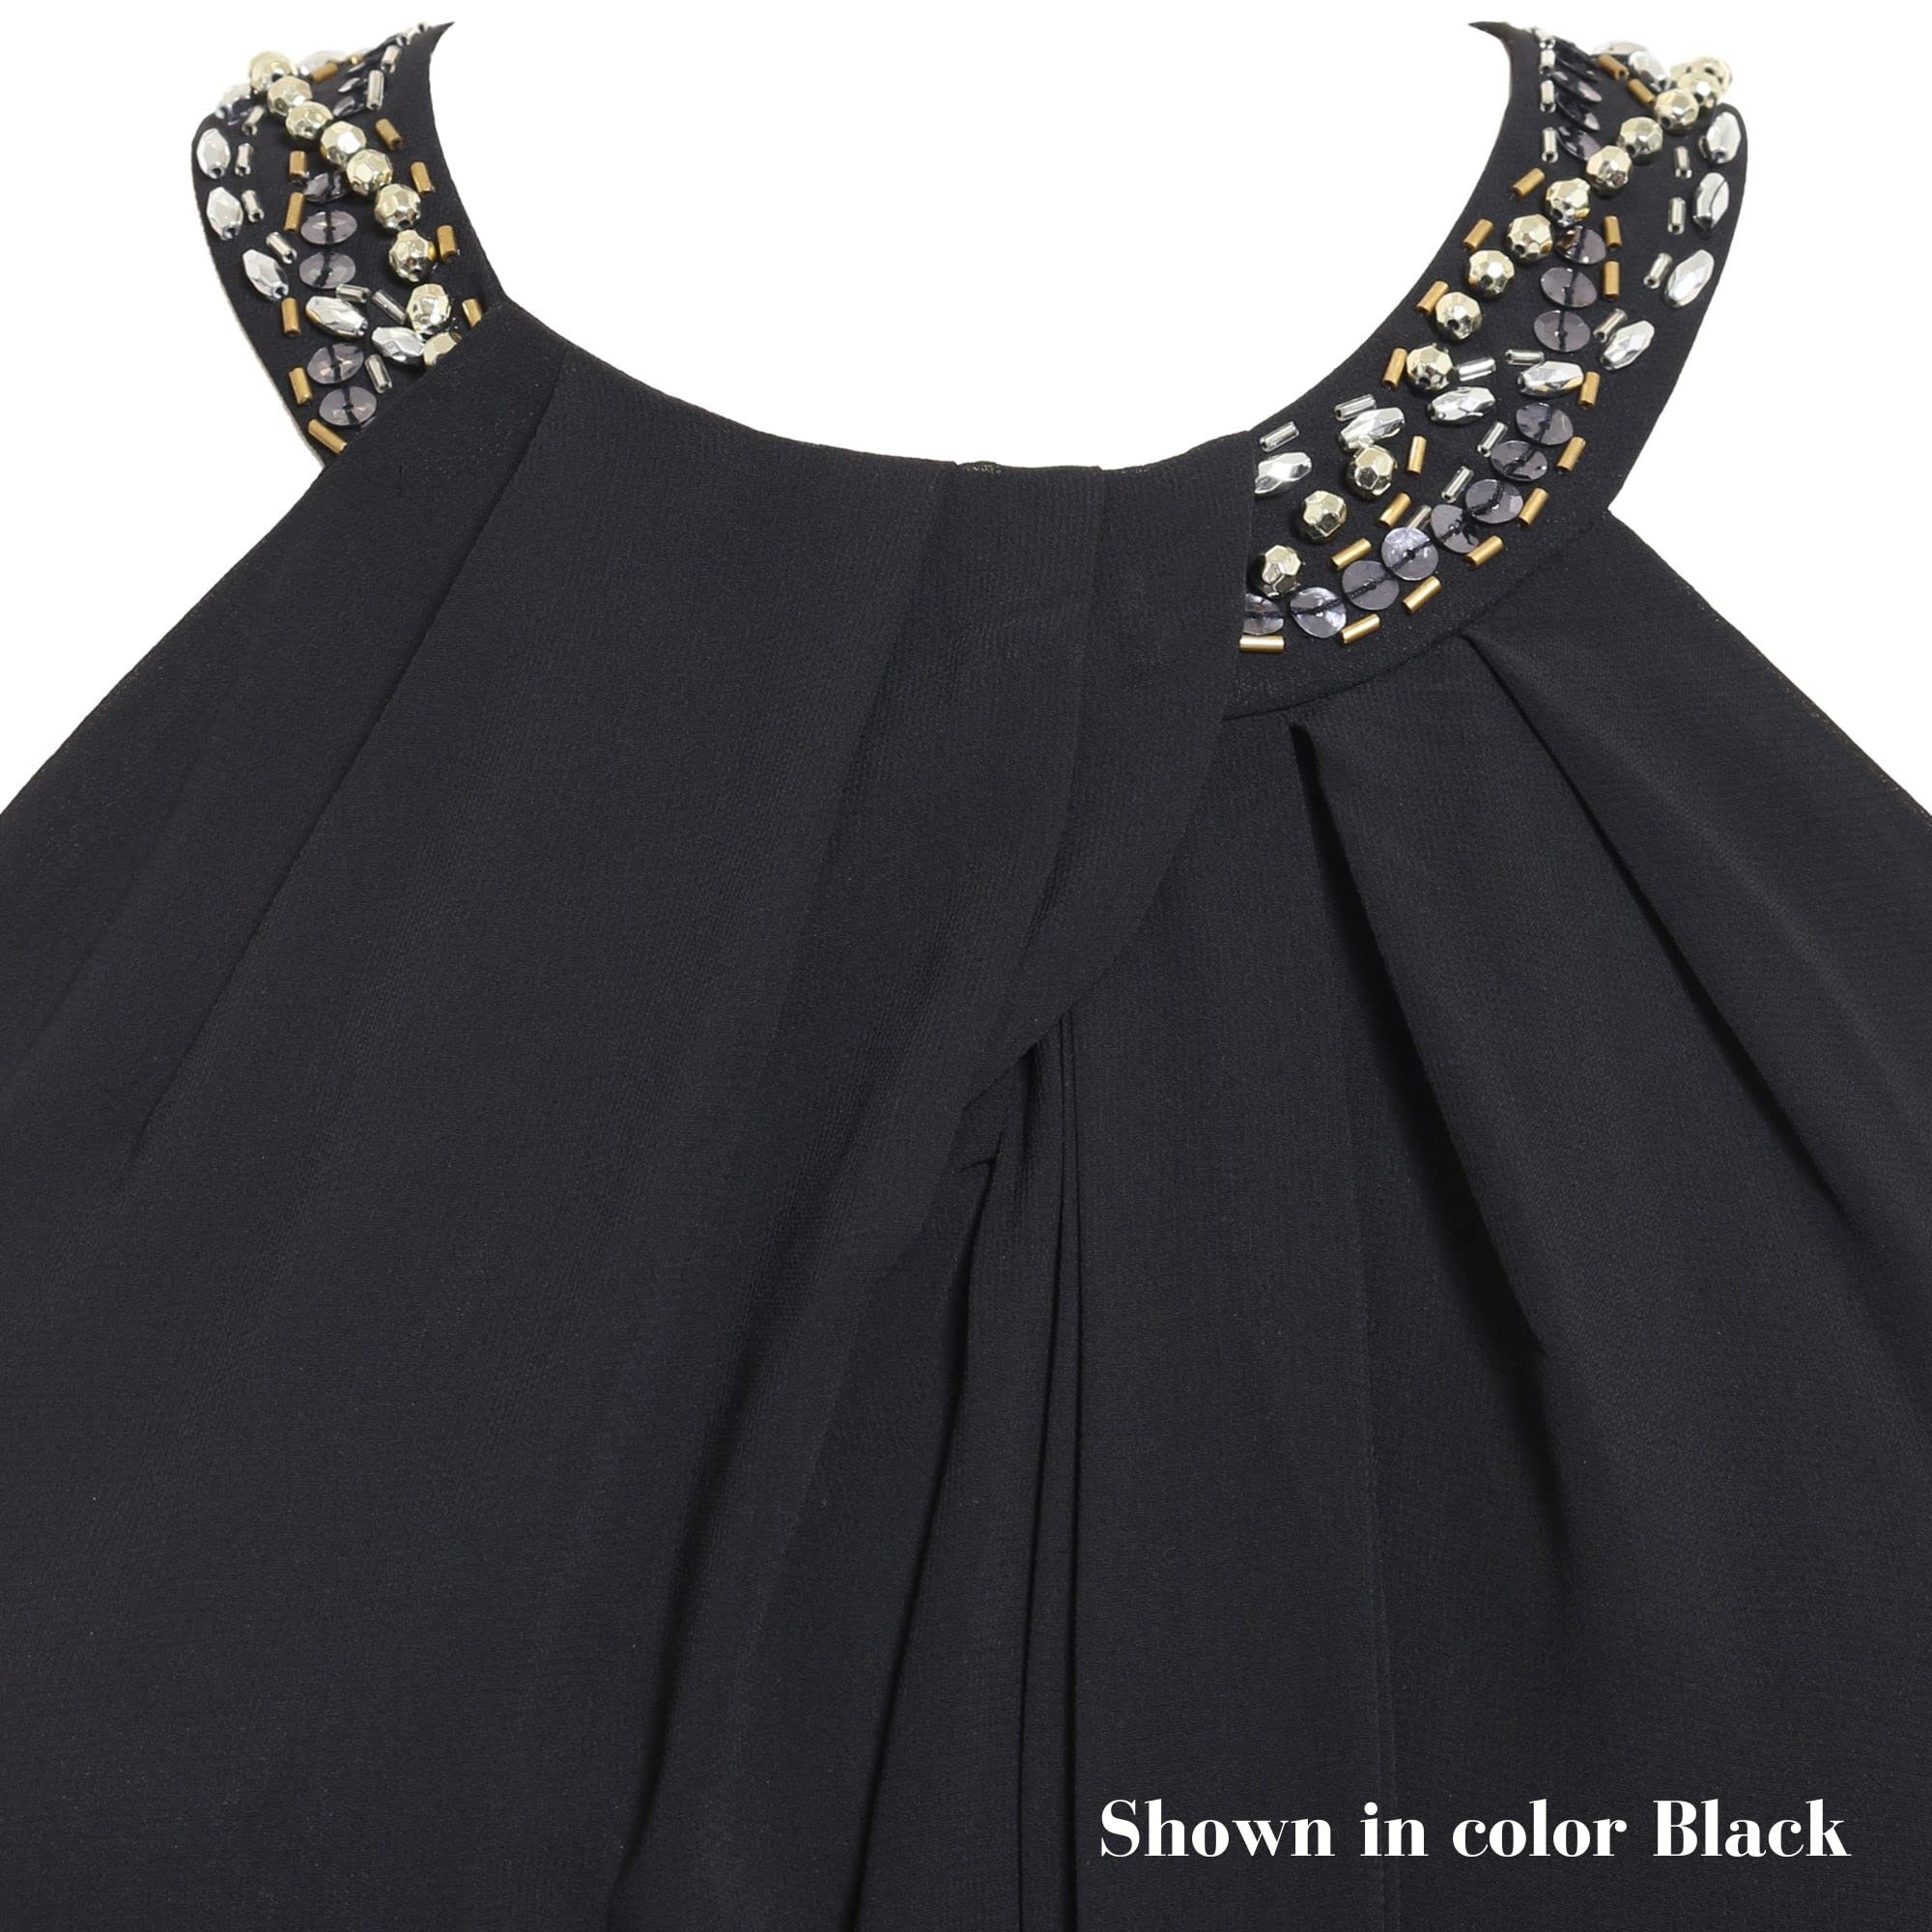 S.L. Fashions Women's Jewel Neck Halter Dress (Petite and Regular)